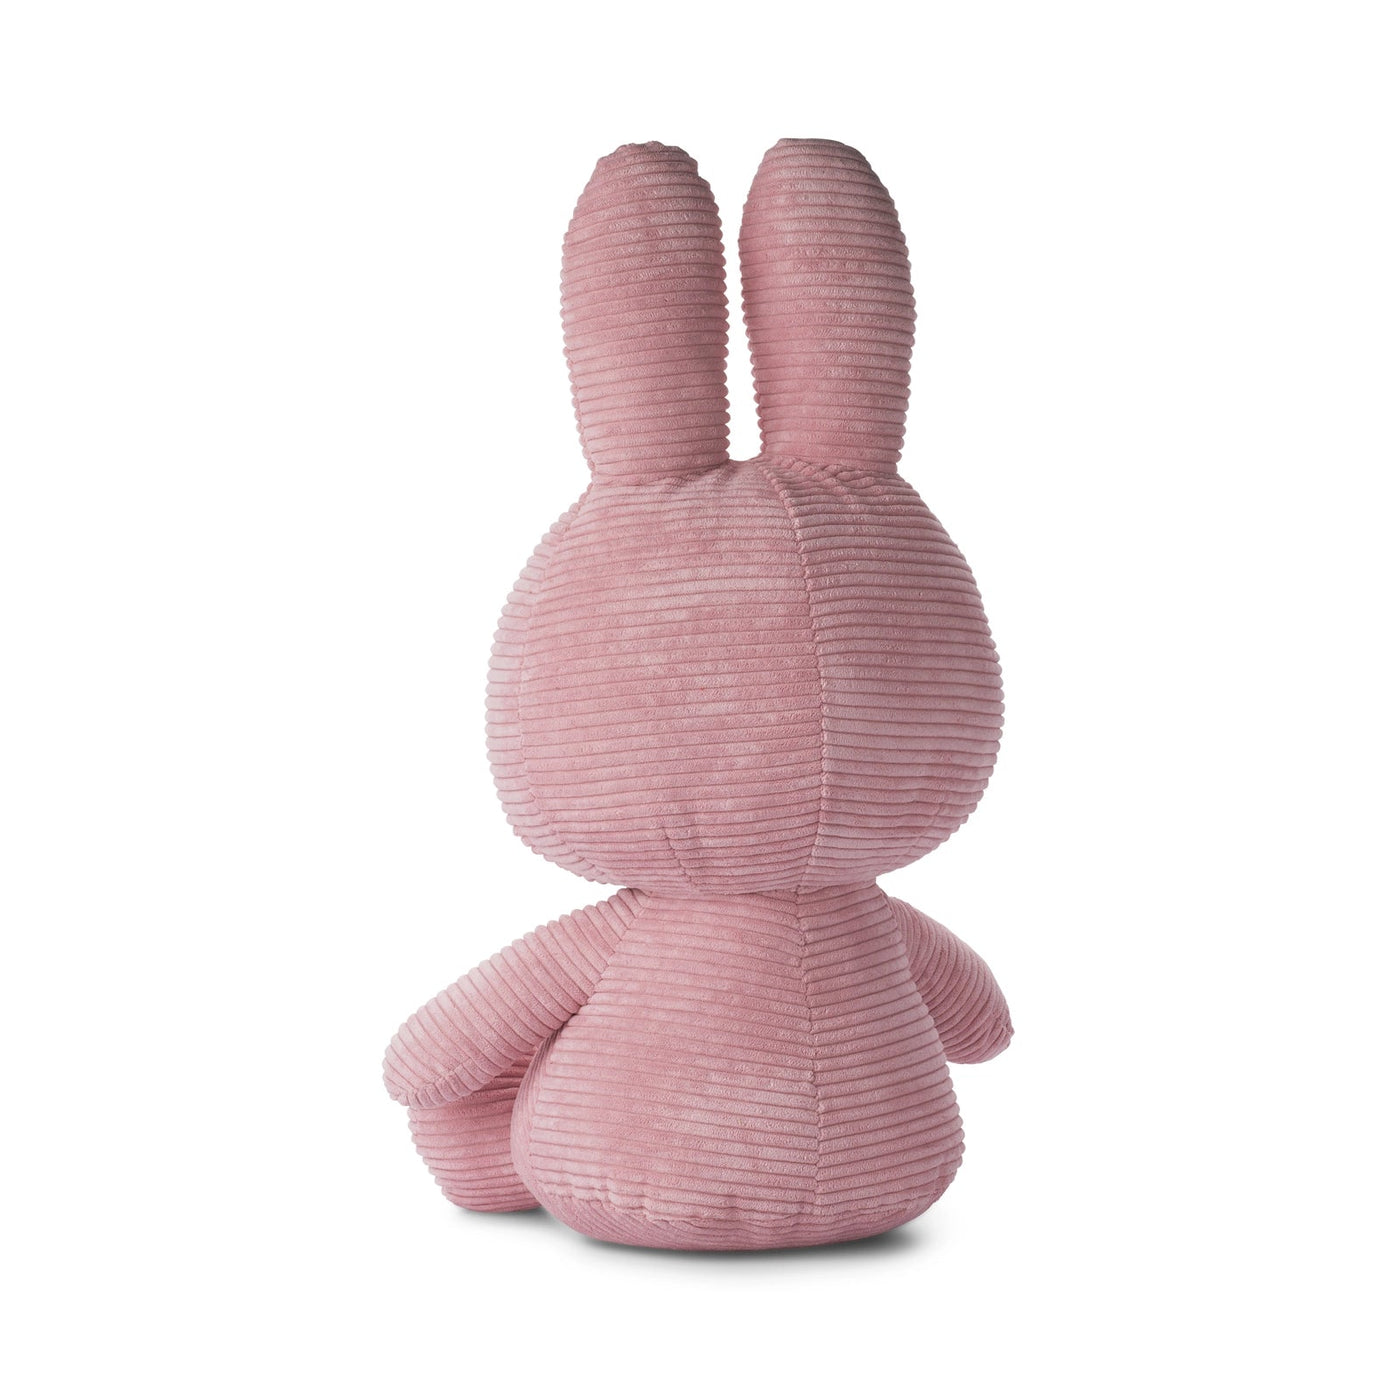 Miffy Giant Plush Toy Pink - 50cm